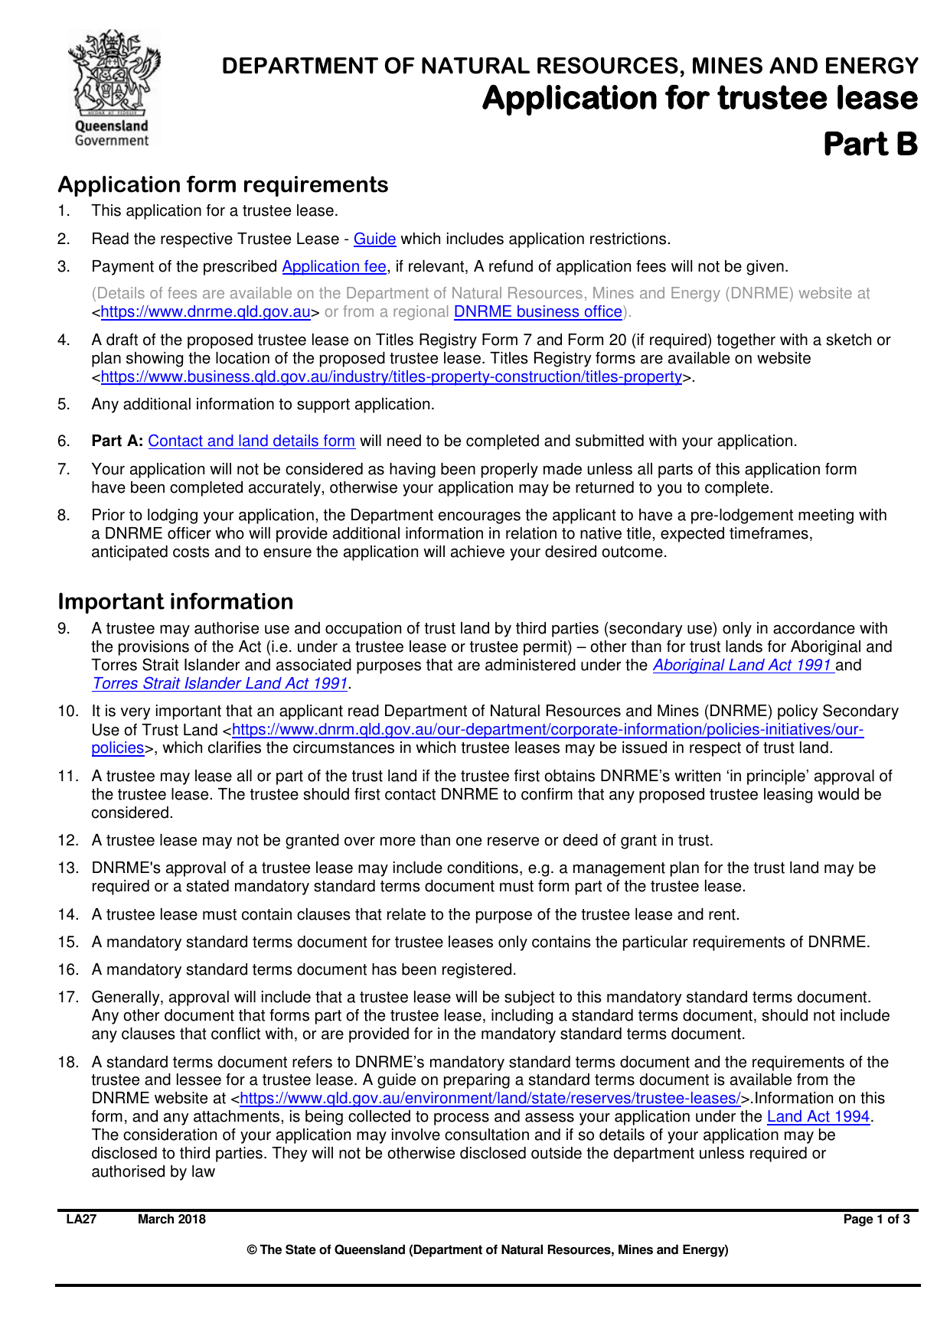 Form LA27 Part B Application for a Trustee Lease - Queensland, Australia, Page 1